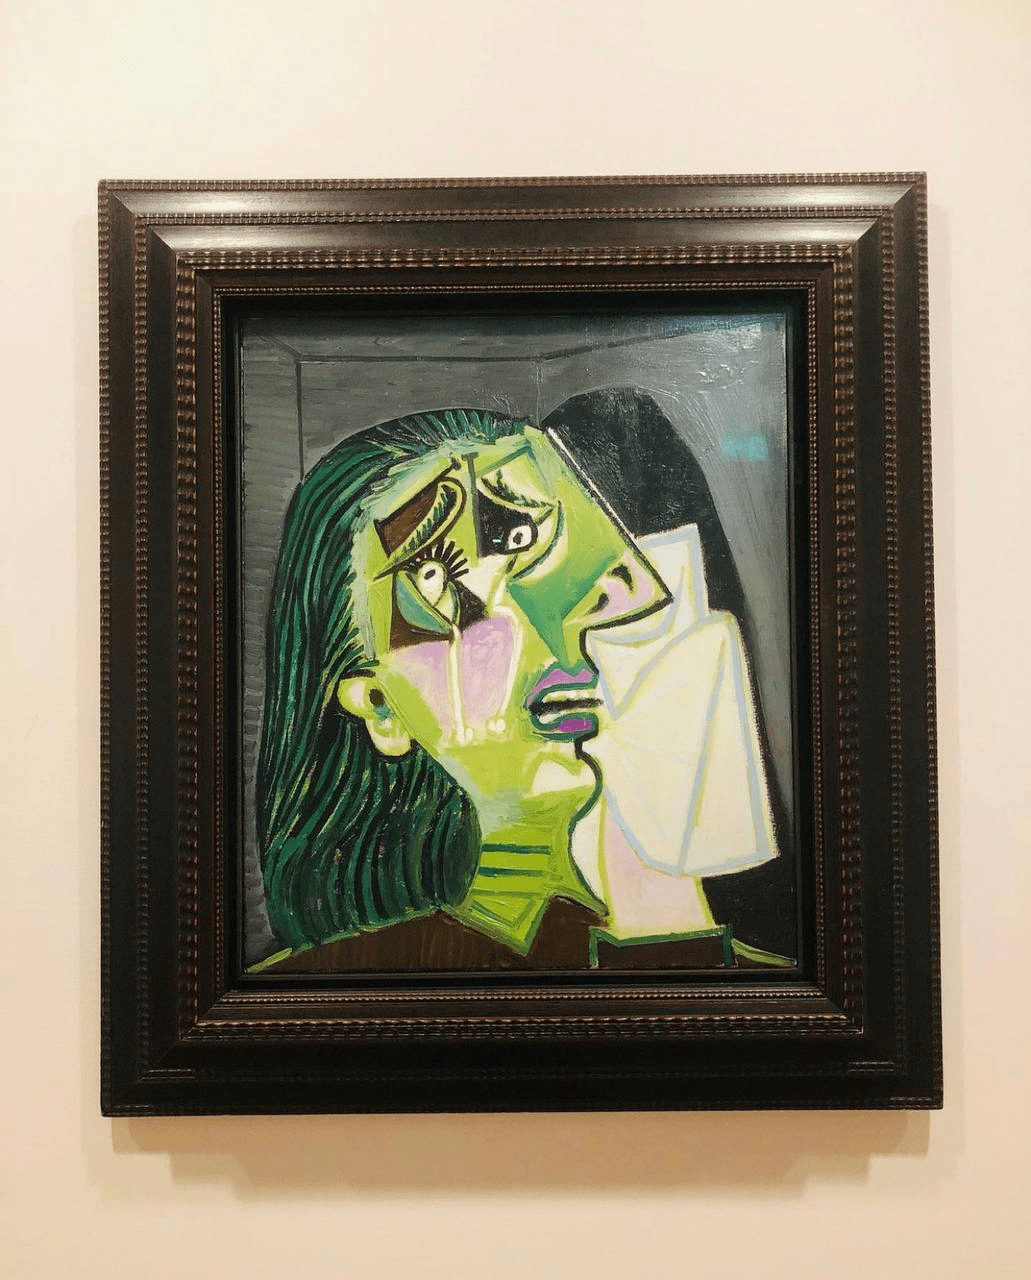 The Picasso Century exhibition